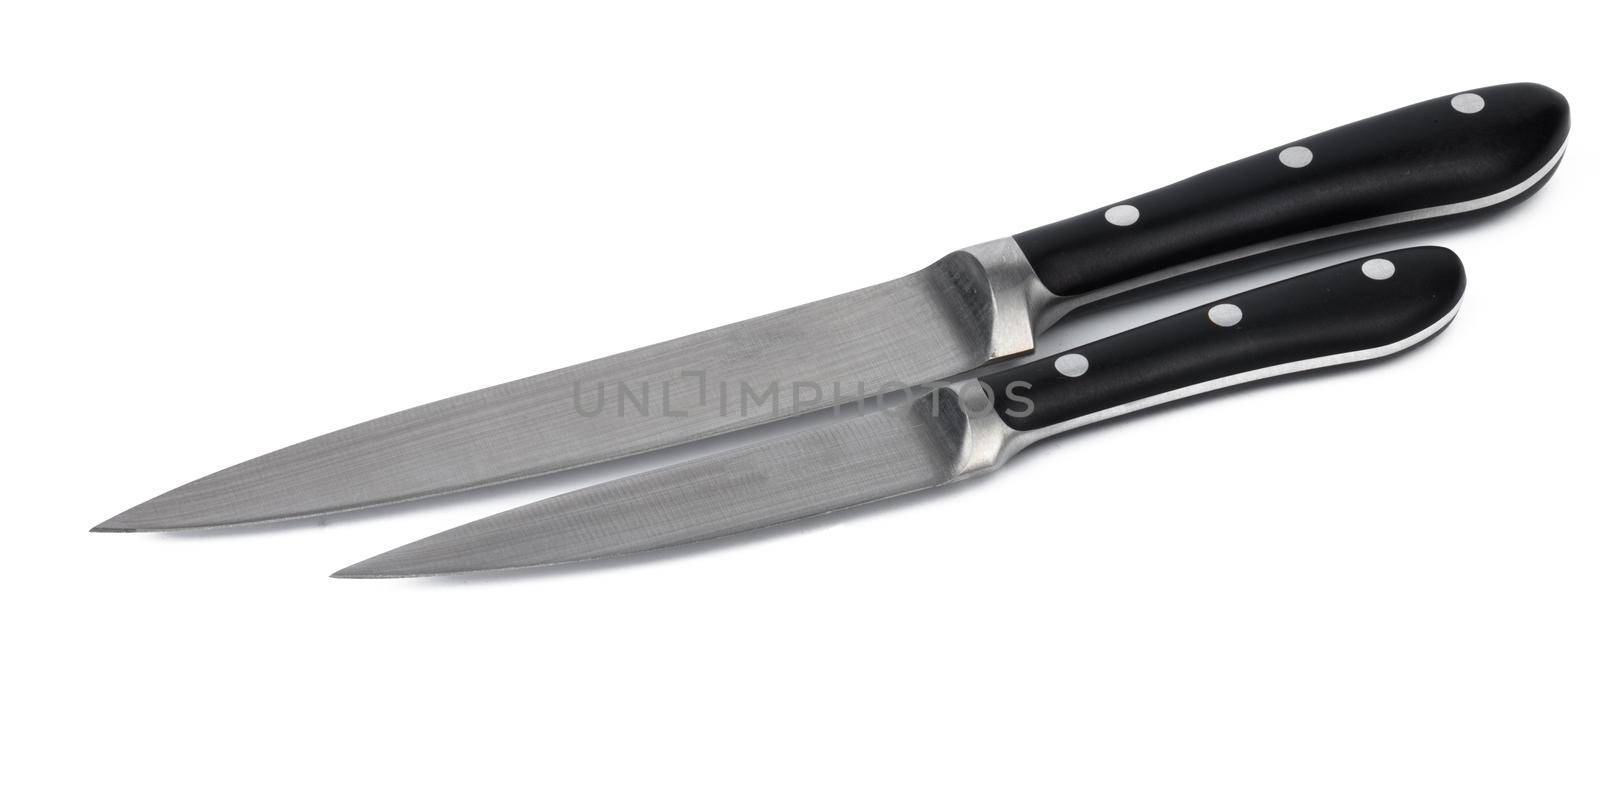 New sharp metal knife on white background by Fabrikasimf